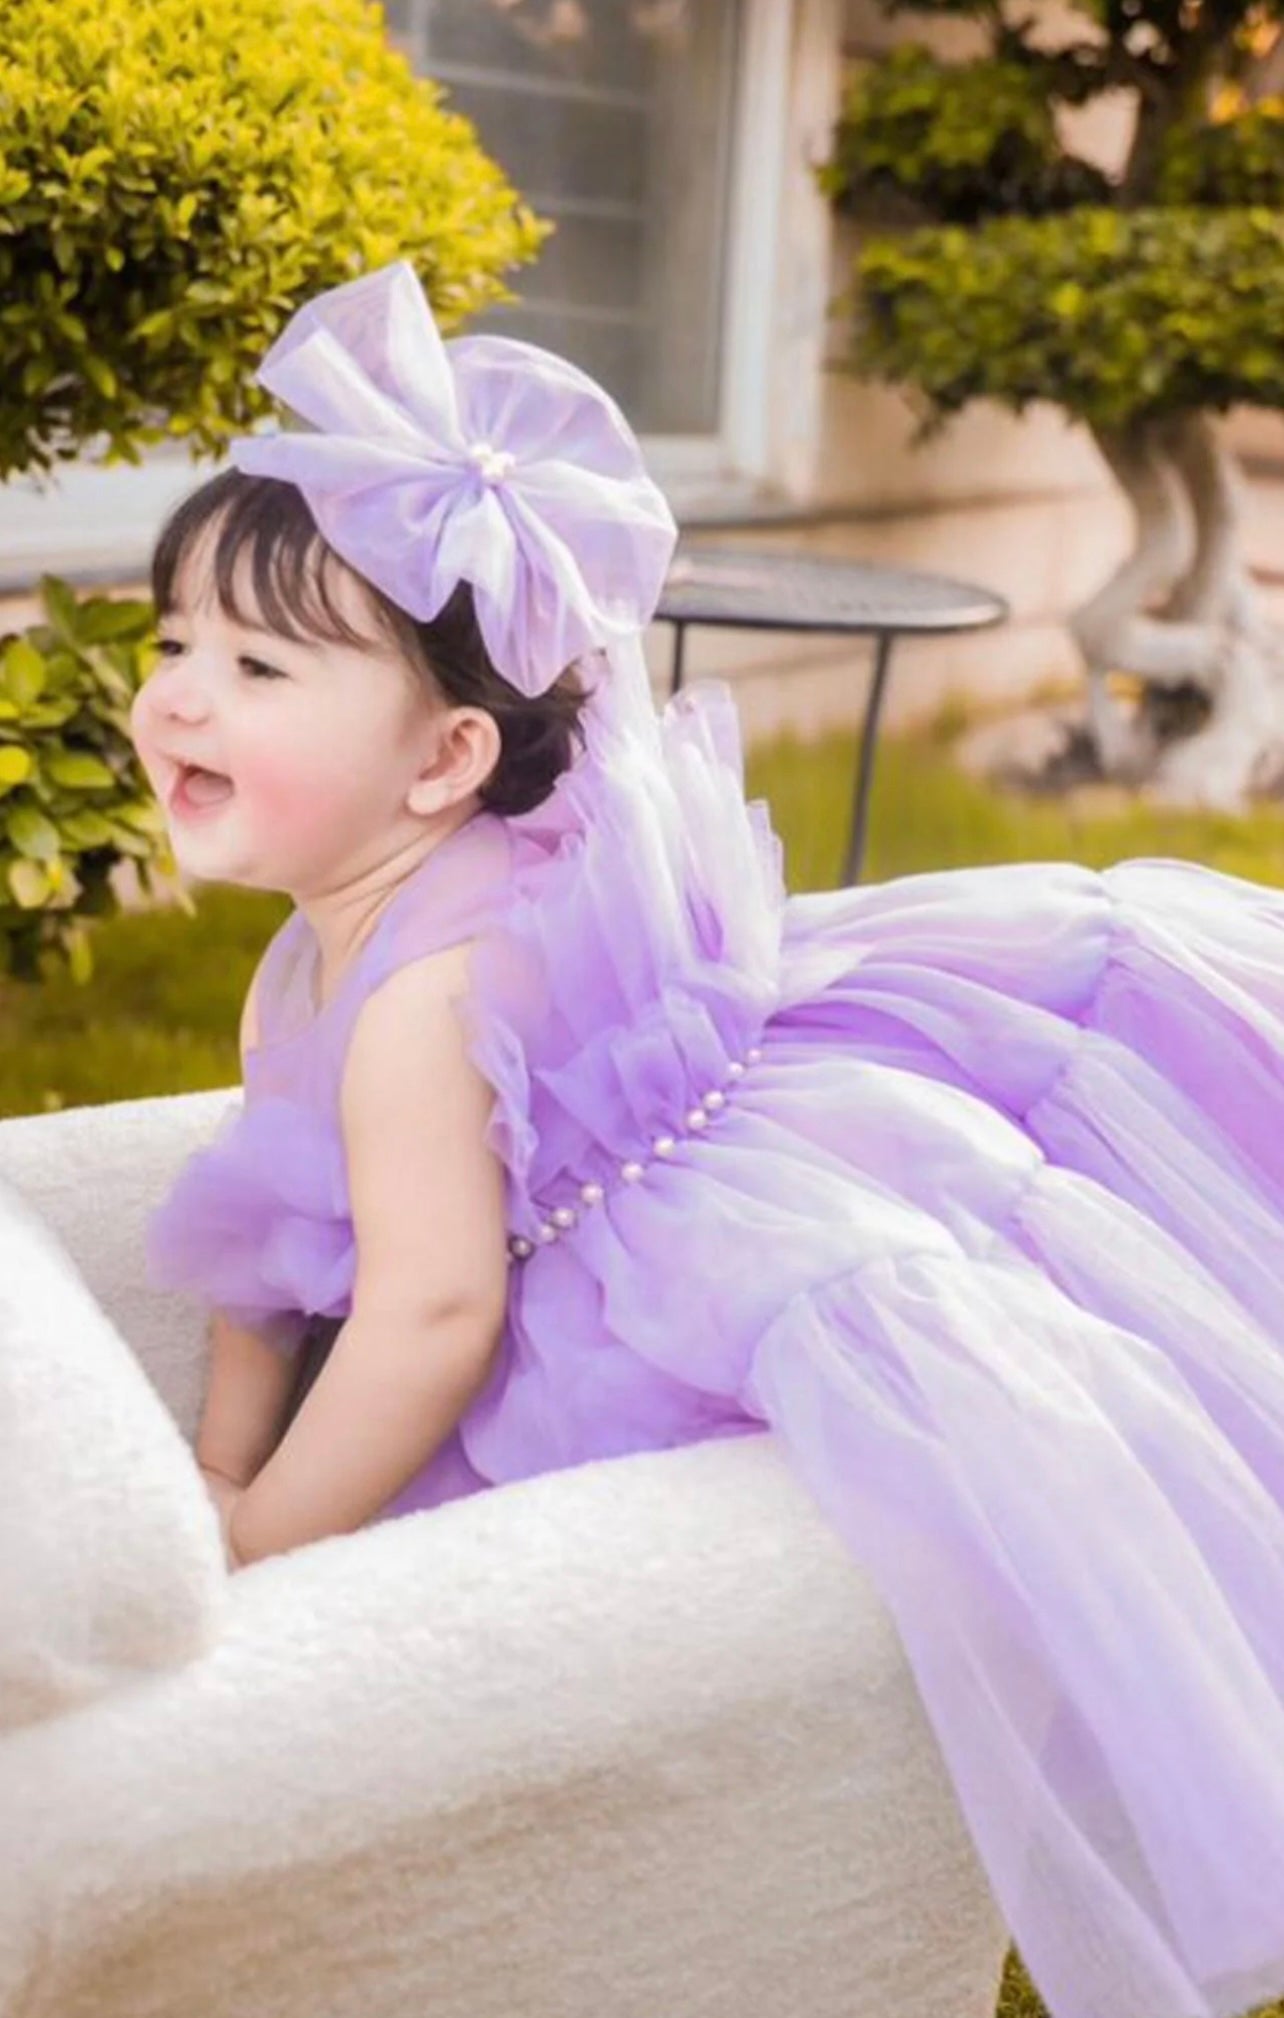 Lavender Girls Princess Dress for Birthday